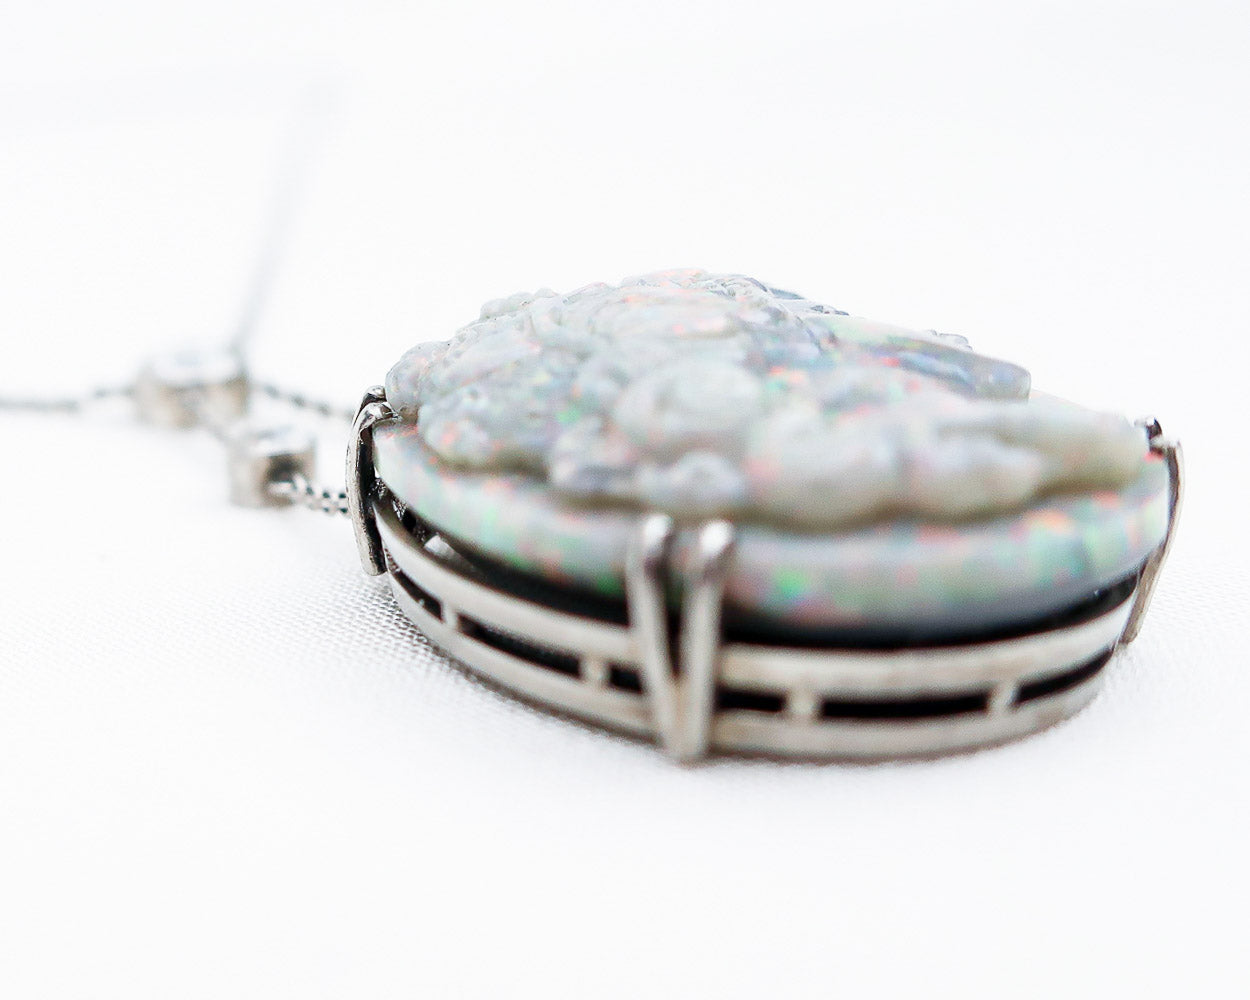 Edwardian Opal Cameo Necklace